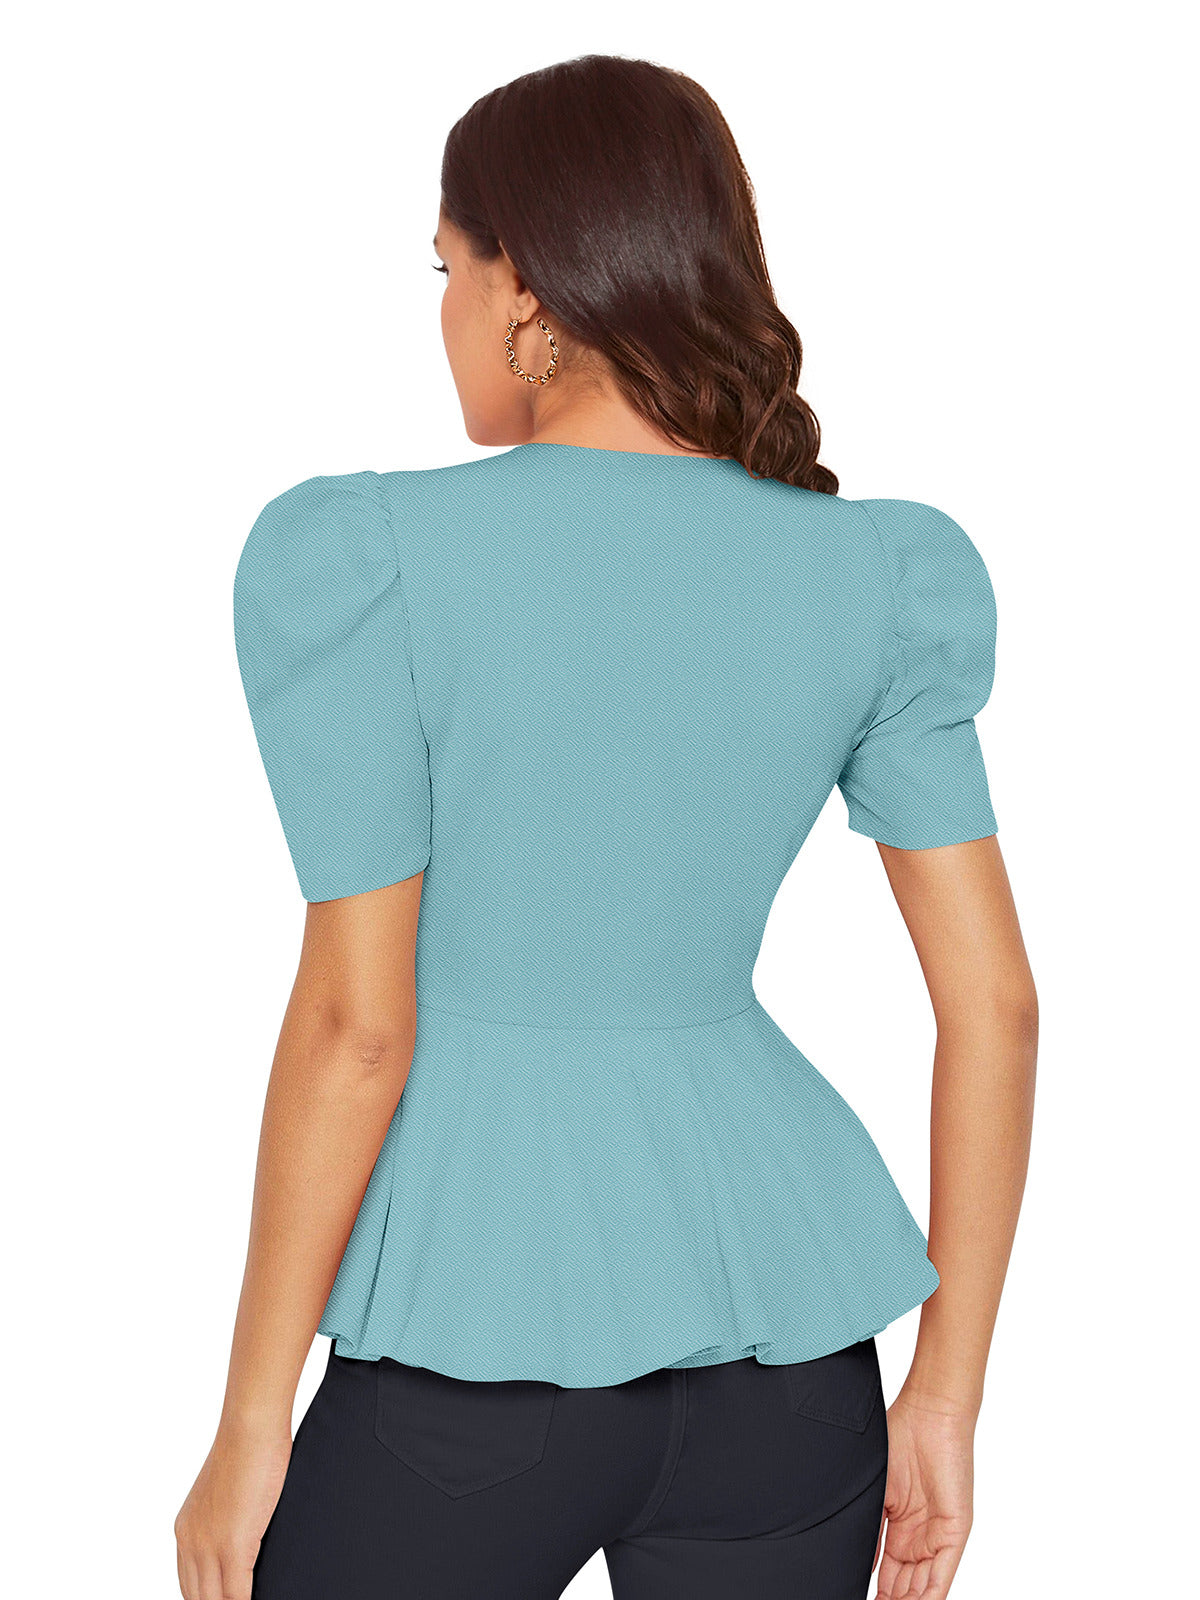 Odette Light Blue  Polyester Solid Top For Women